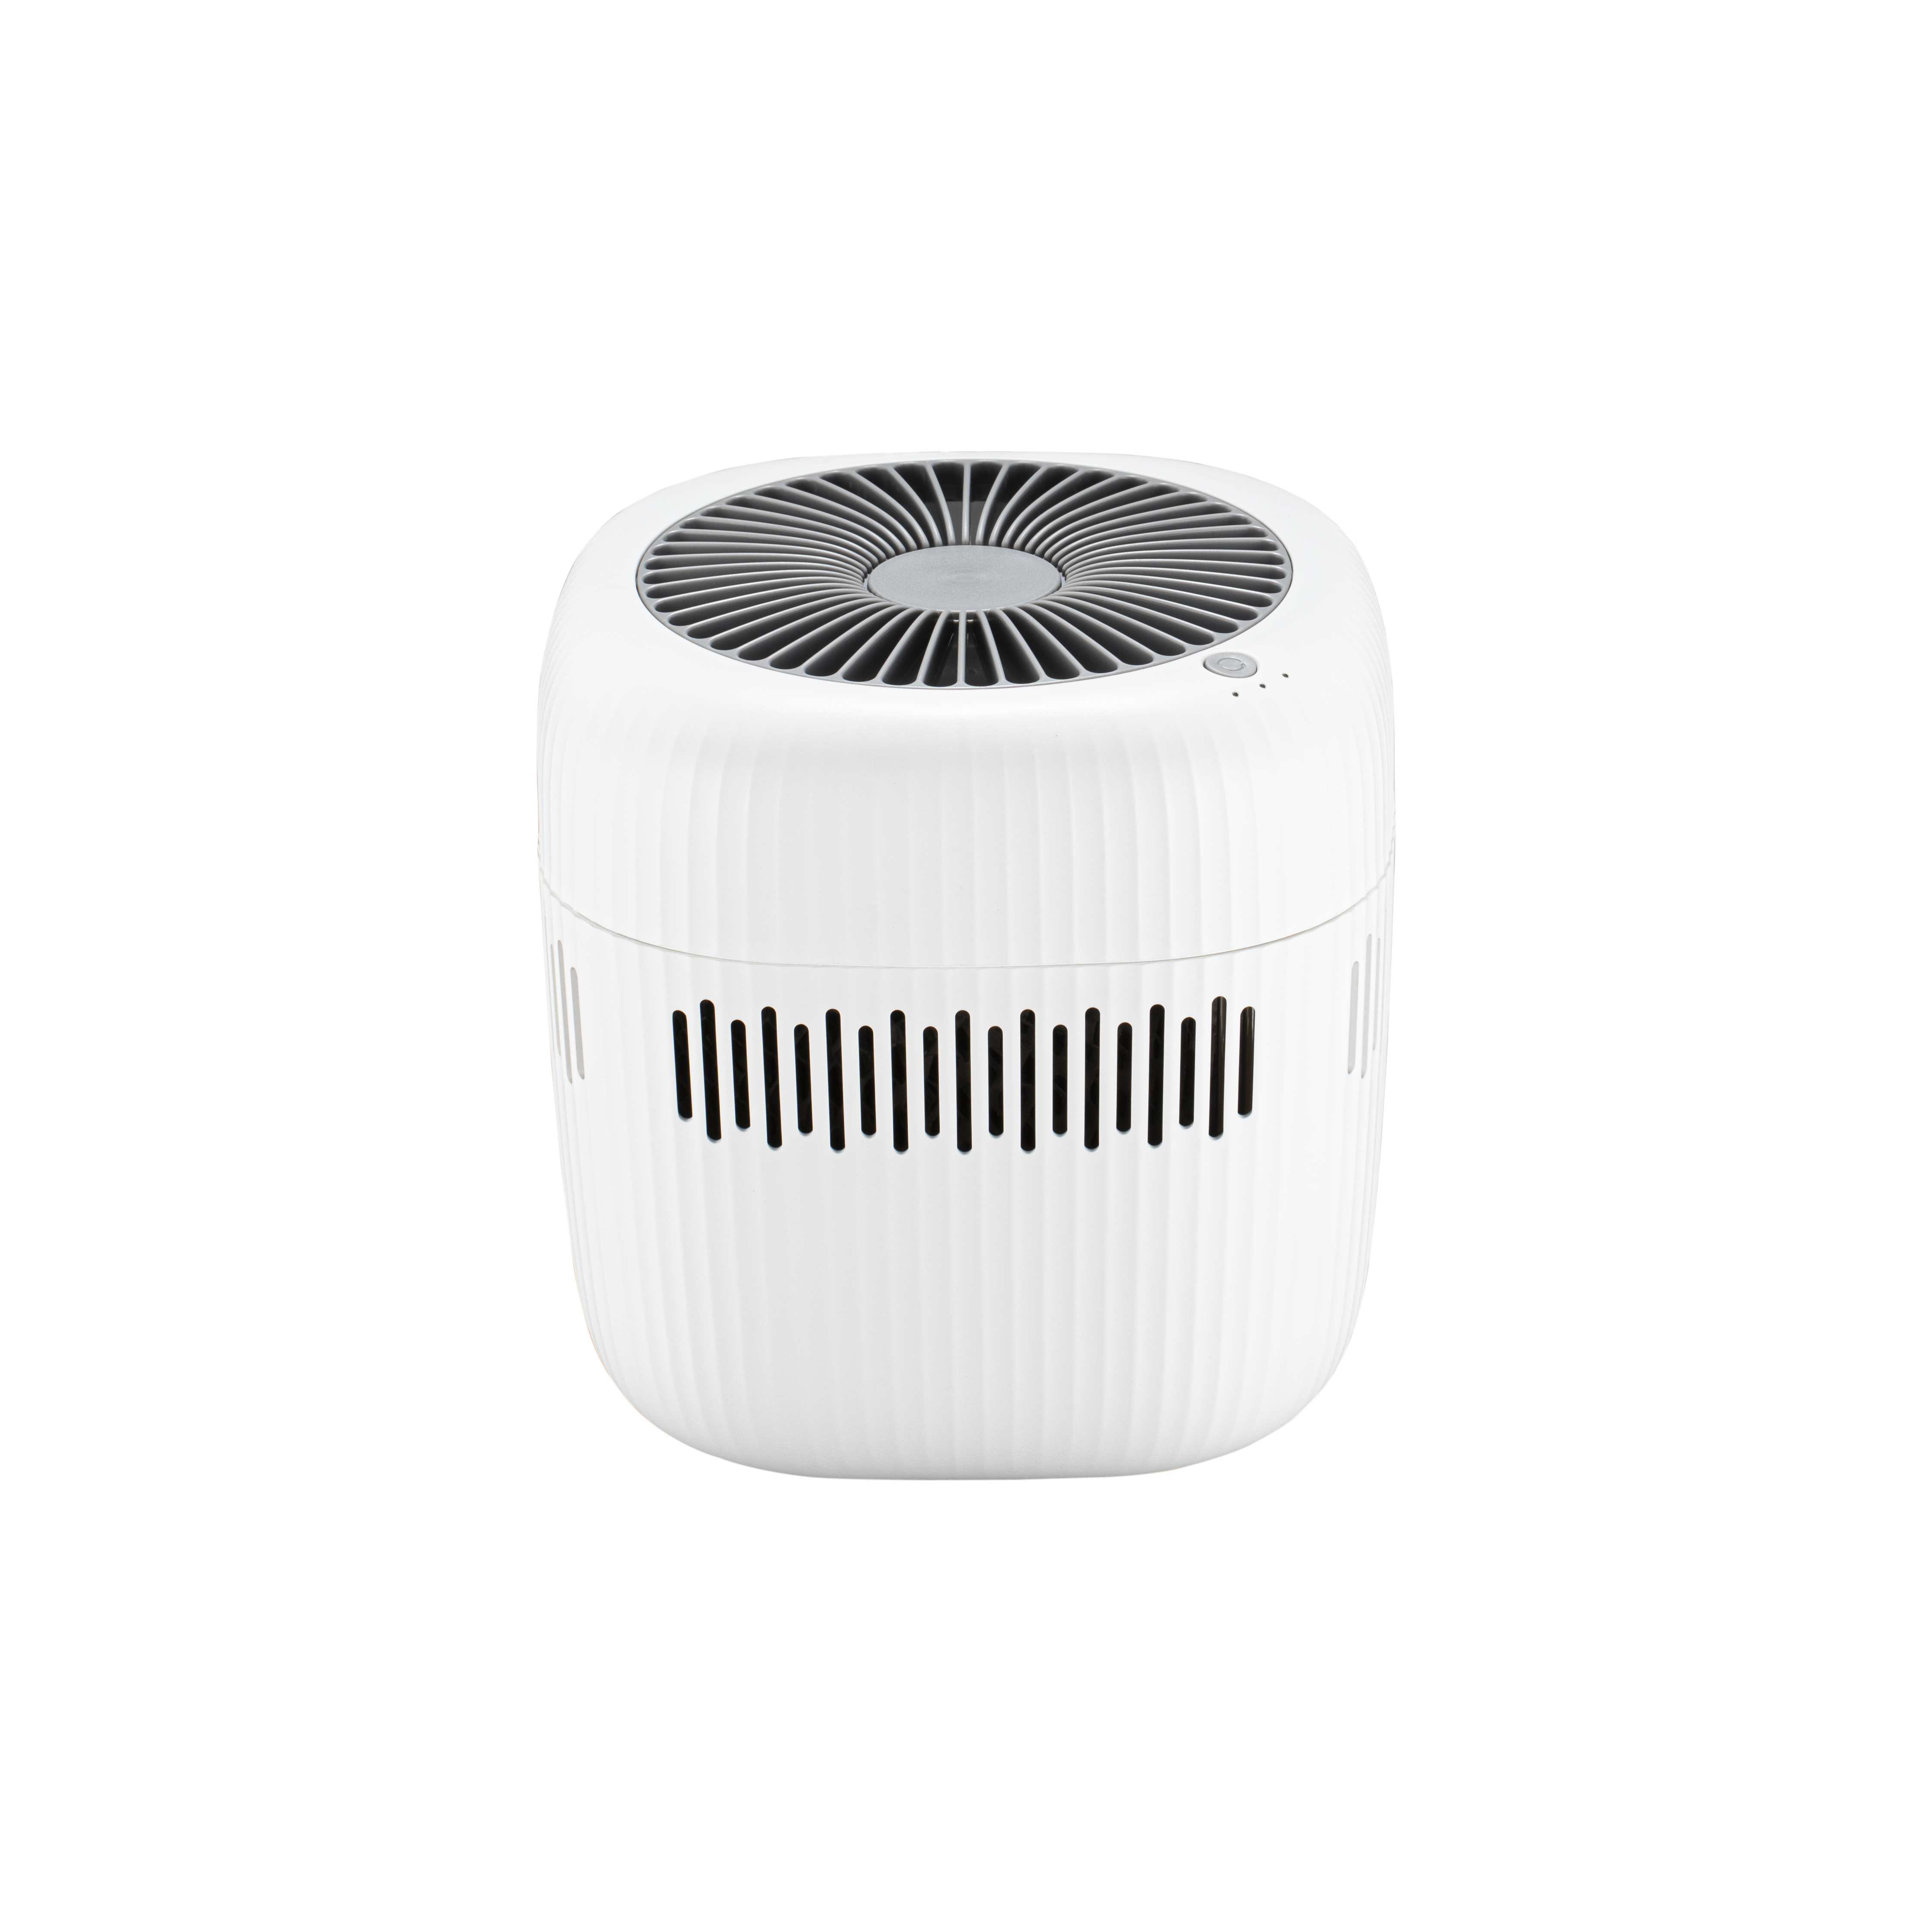 Увлажнитель воздуха Xiaomi Microhoo Evaporative Humidifier J1B увлажнитель воздуха xiaomi microhoo evaporative humidifier j1b